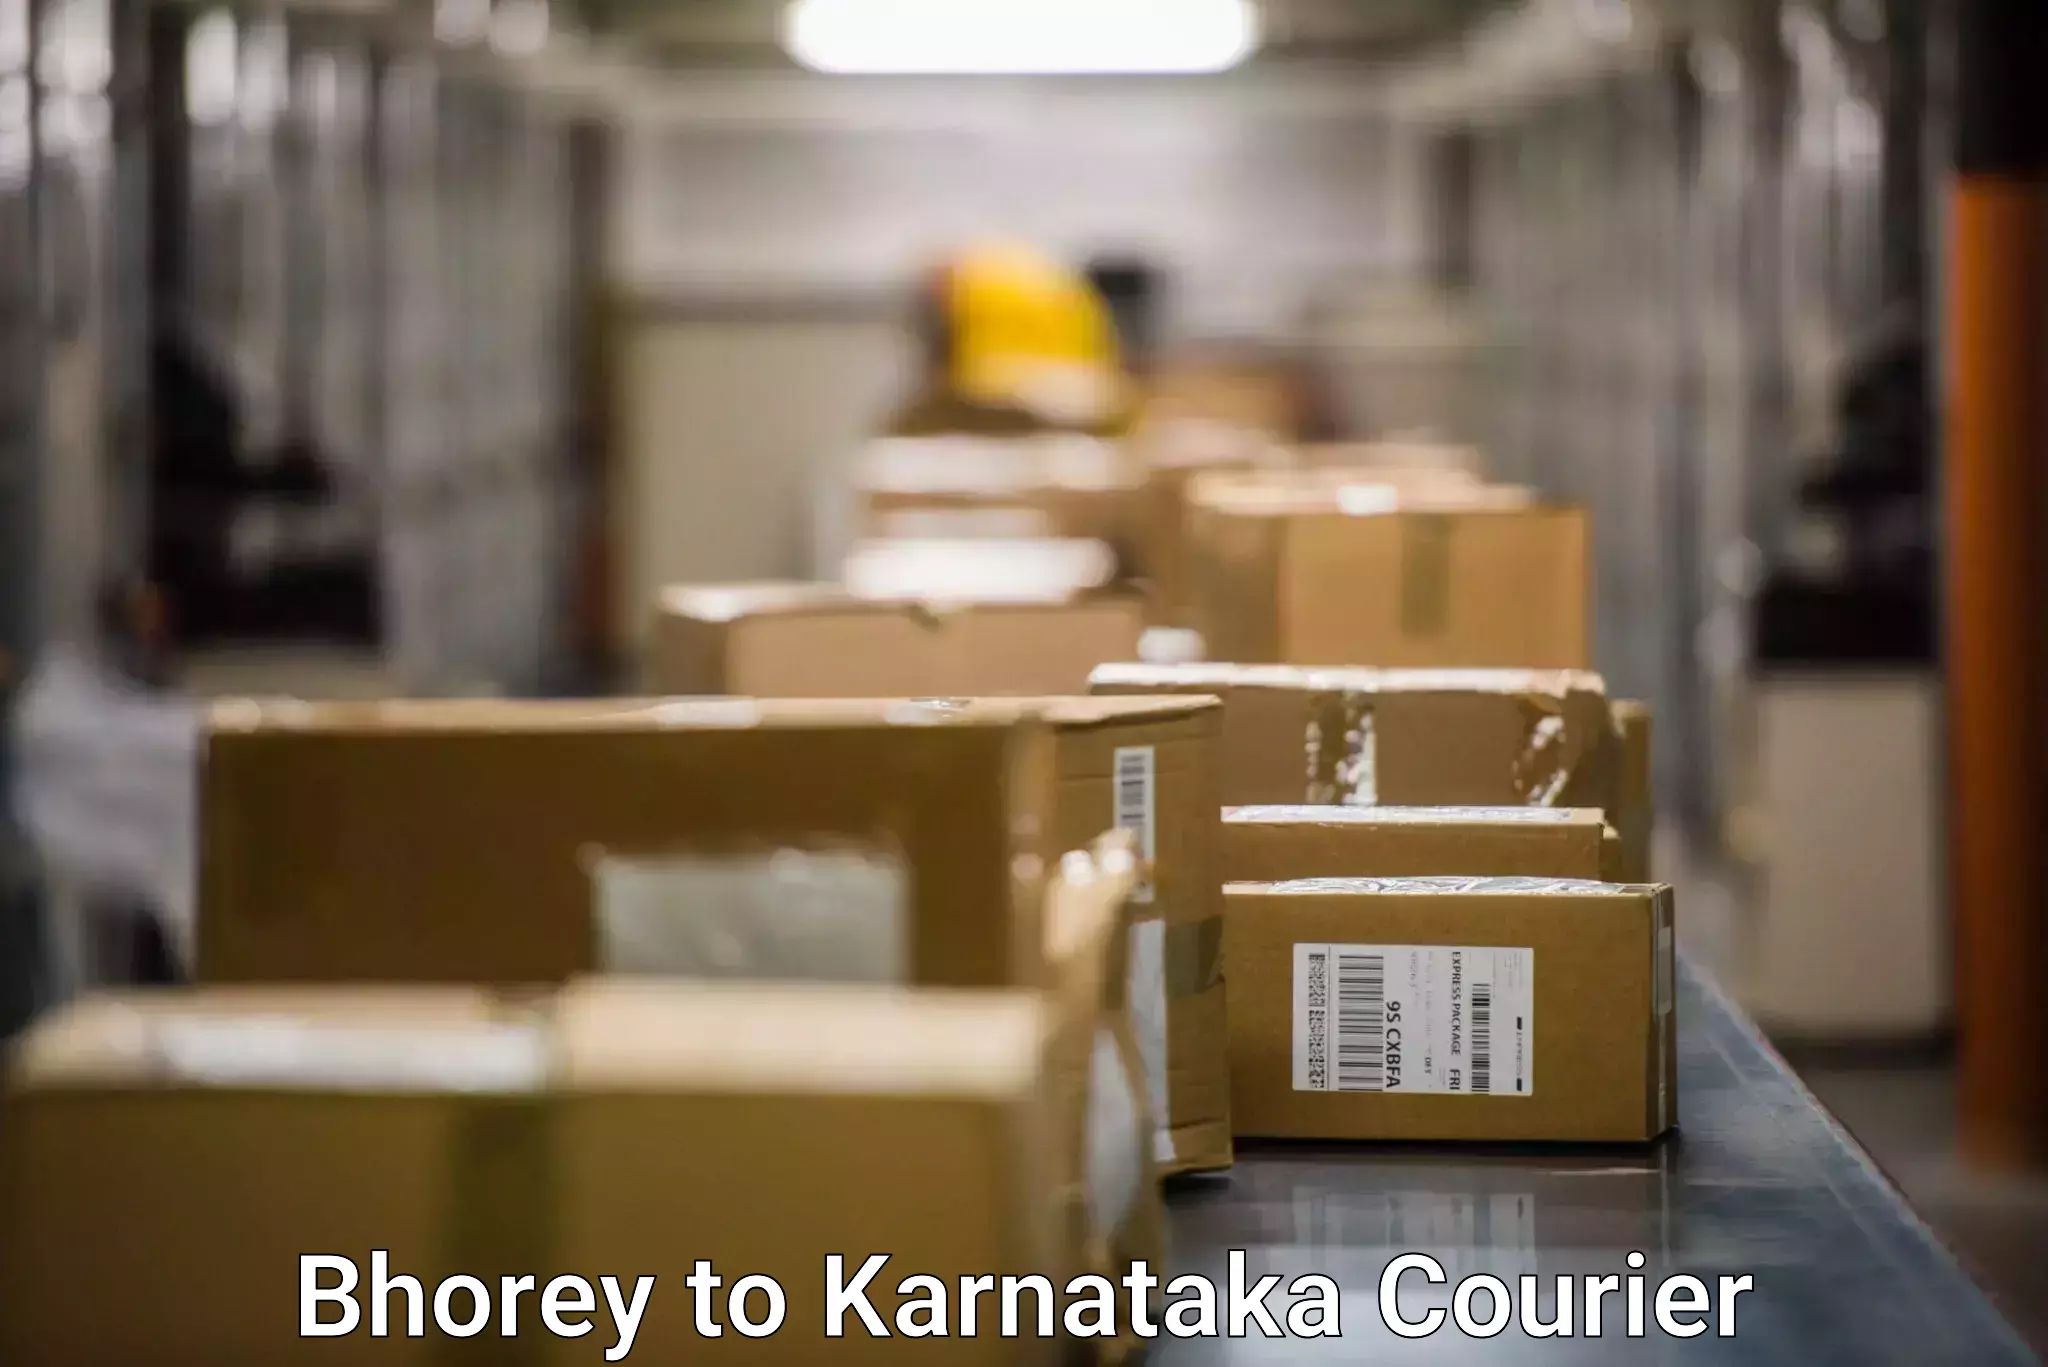 Courier service innovation Bhorey to Sringeri